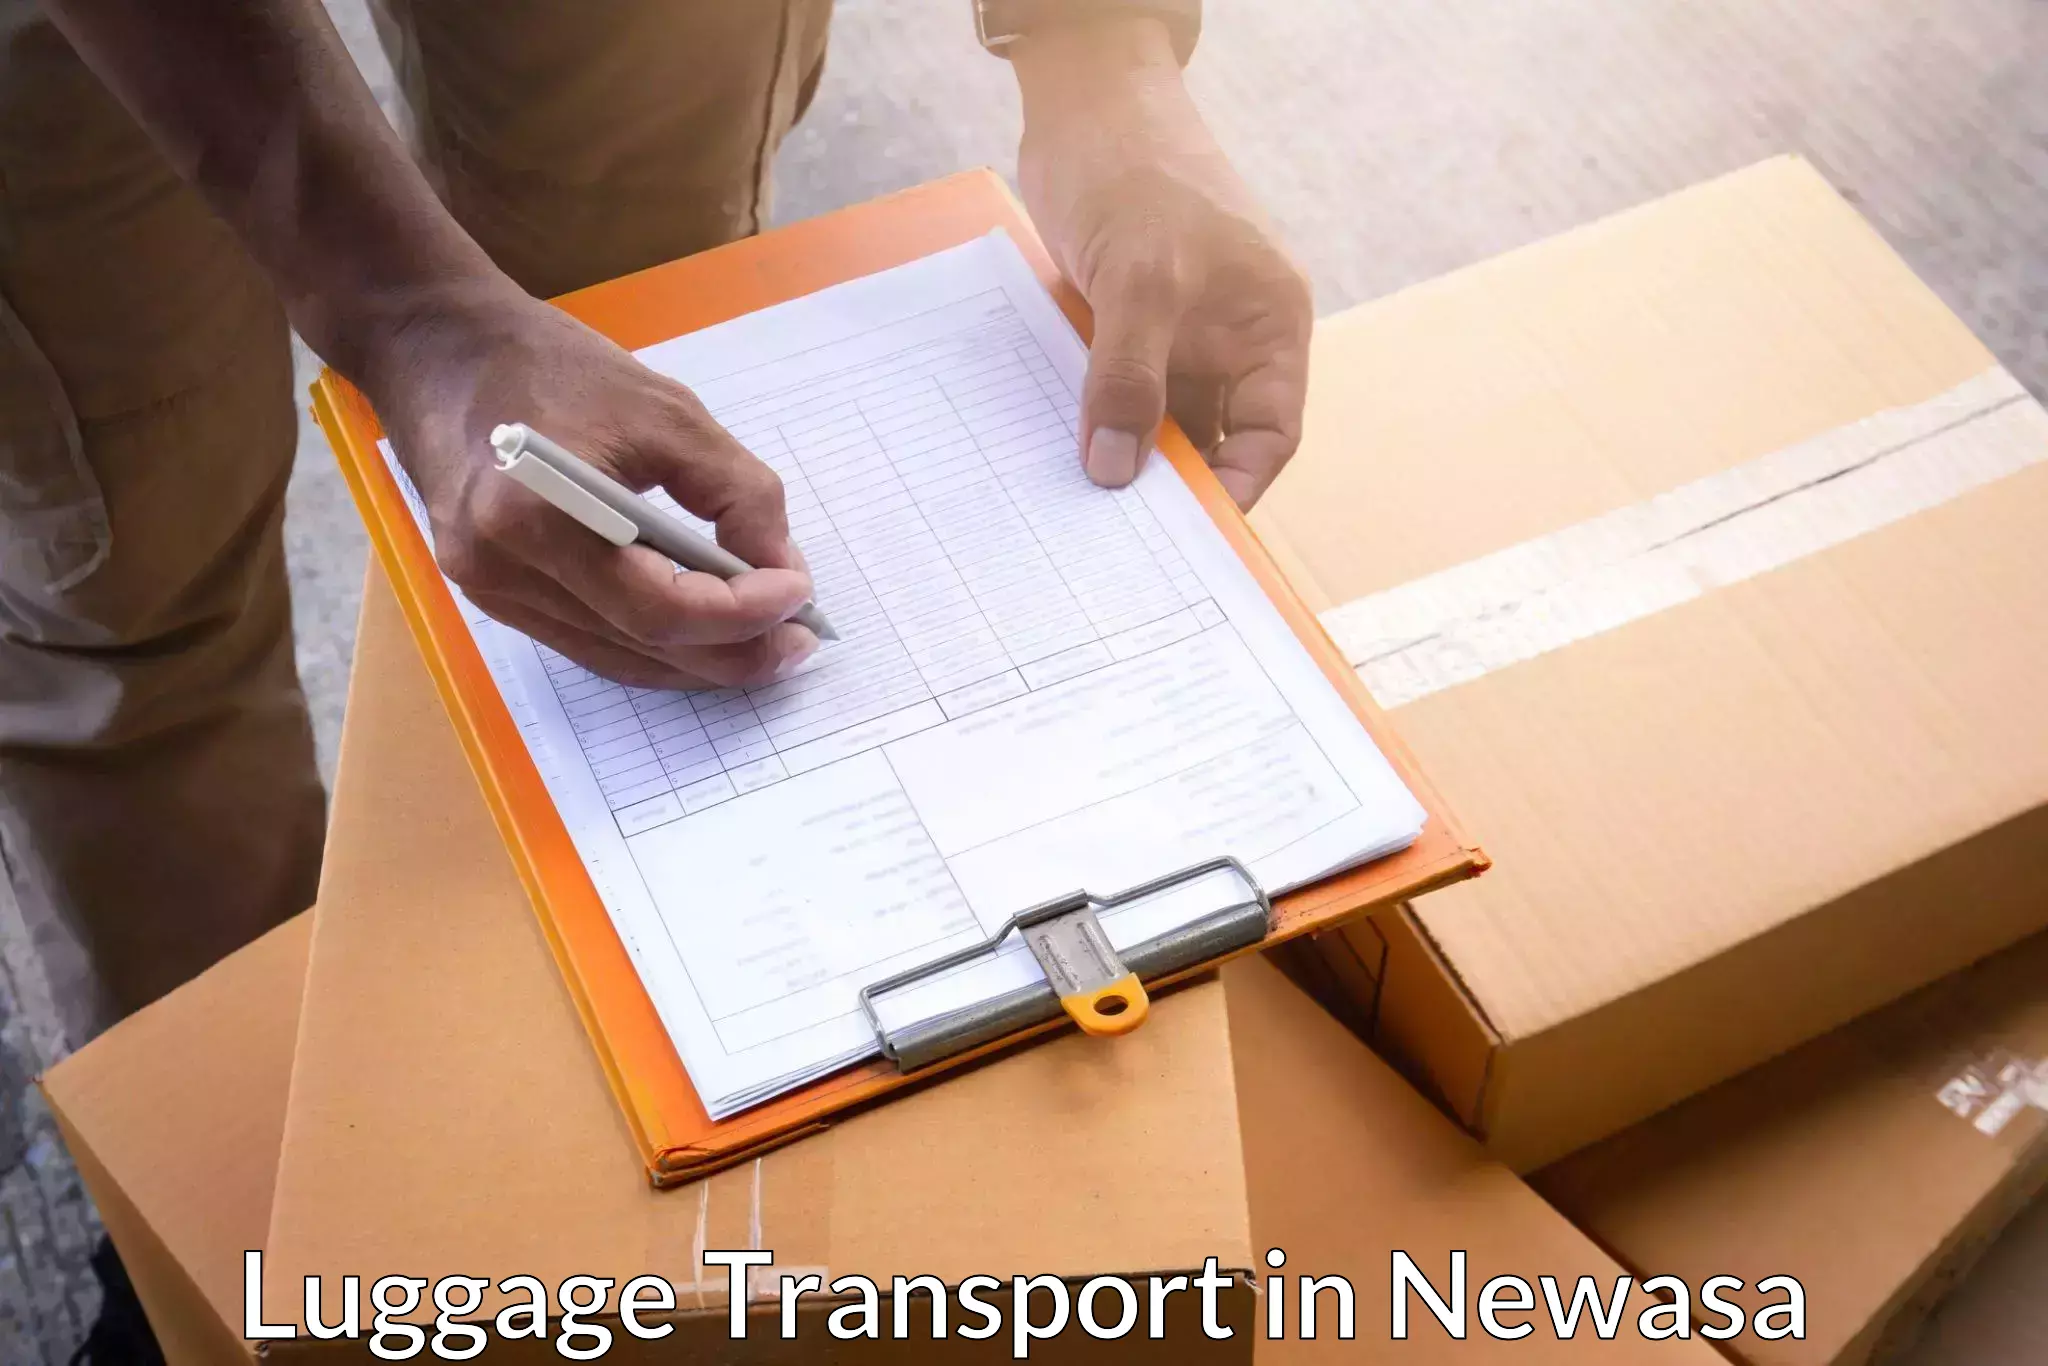 Multi-destination luggage transport in Newasa